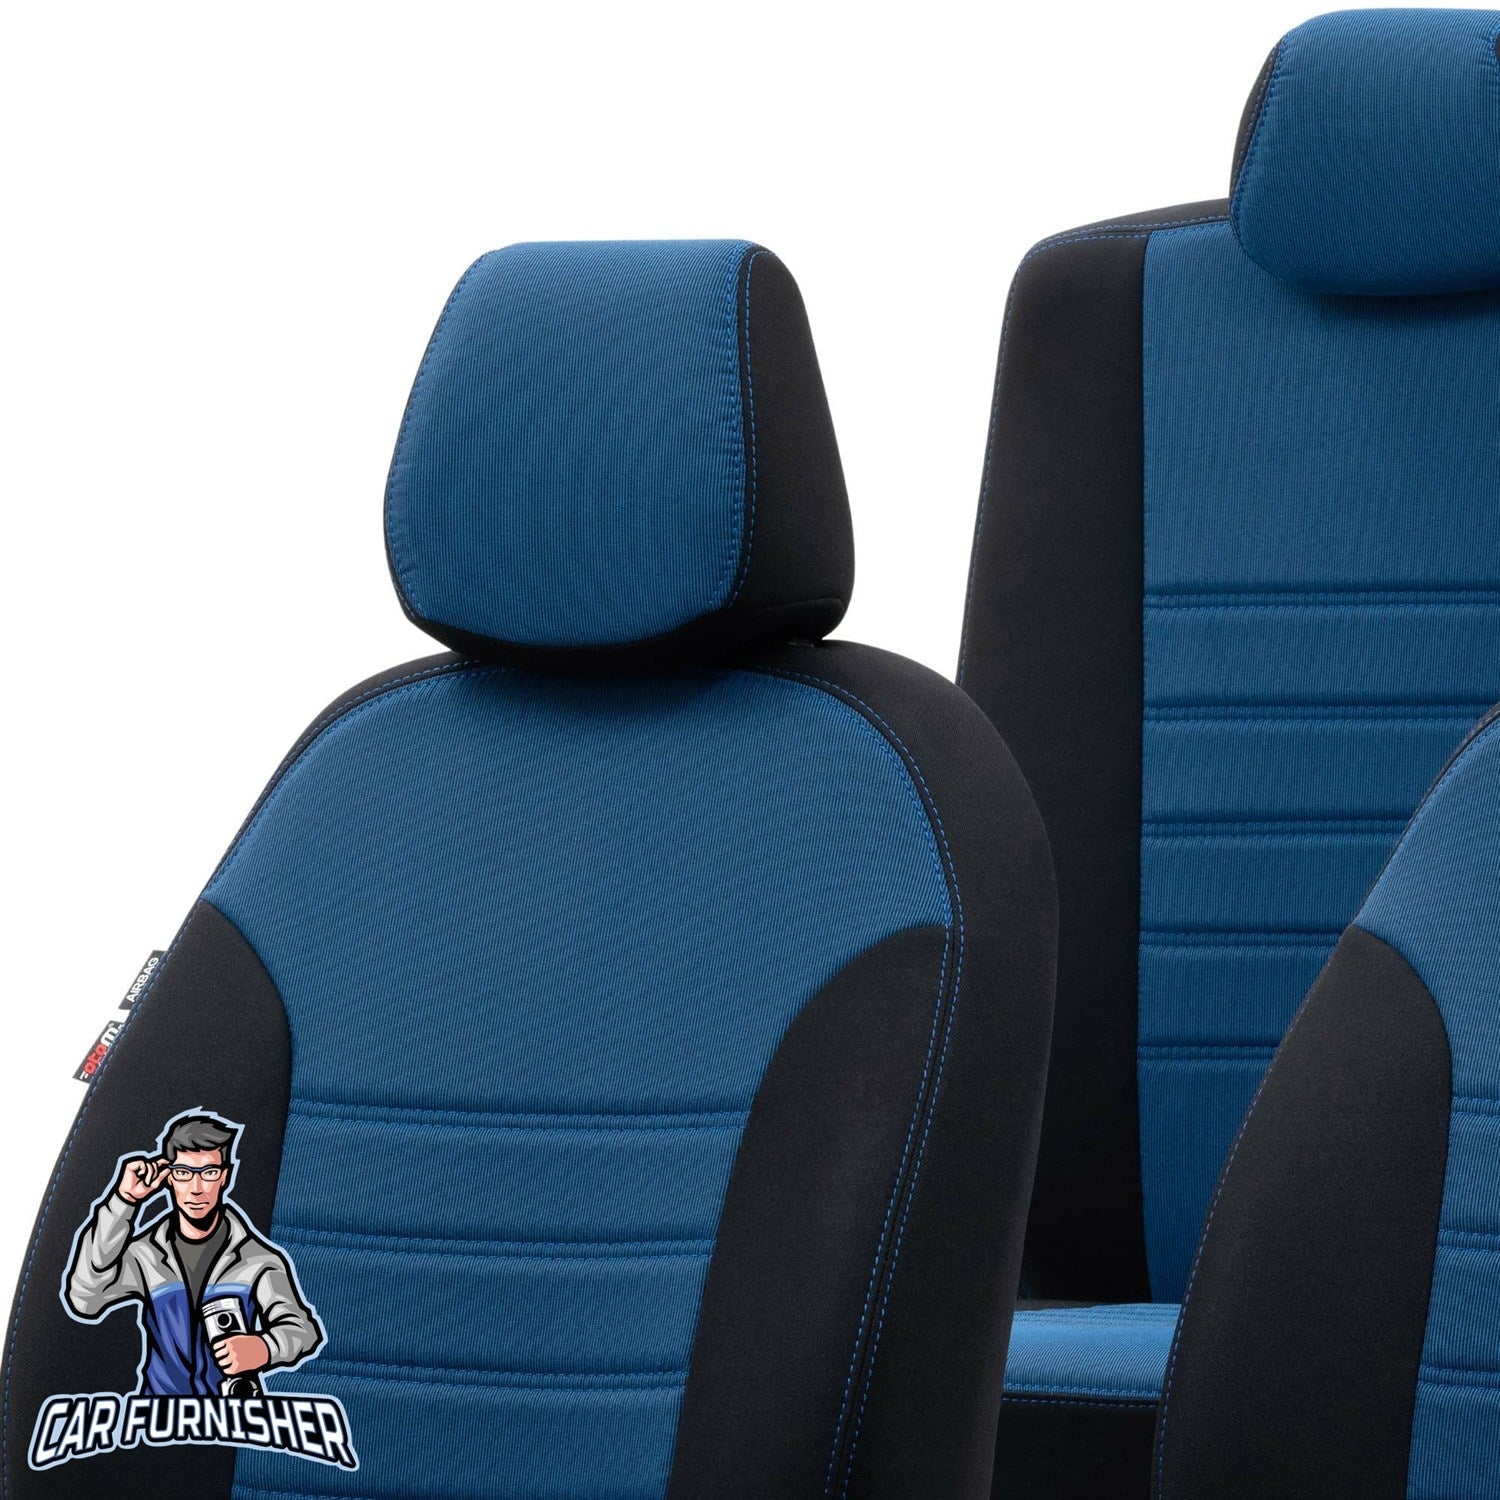 Toyota Rav4 Seat Cover Original Jacquard Design Dark Beige Jacquard Fabric